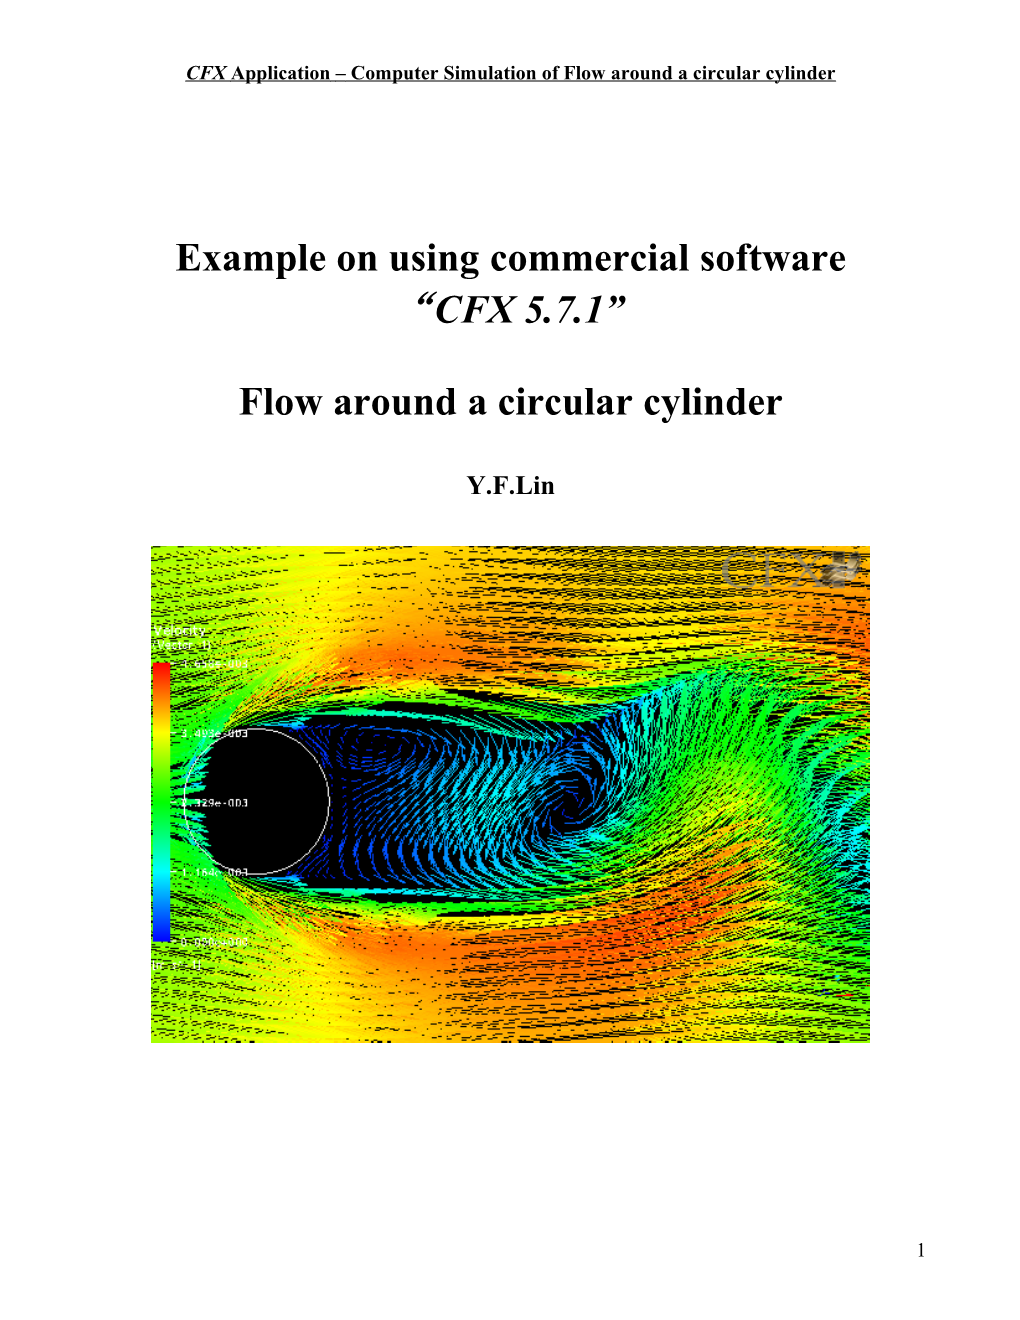 CFX Application Computer Simulation of Flow Around a Circular Cylinder